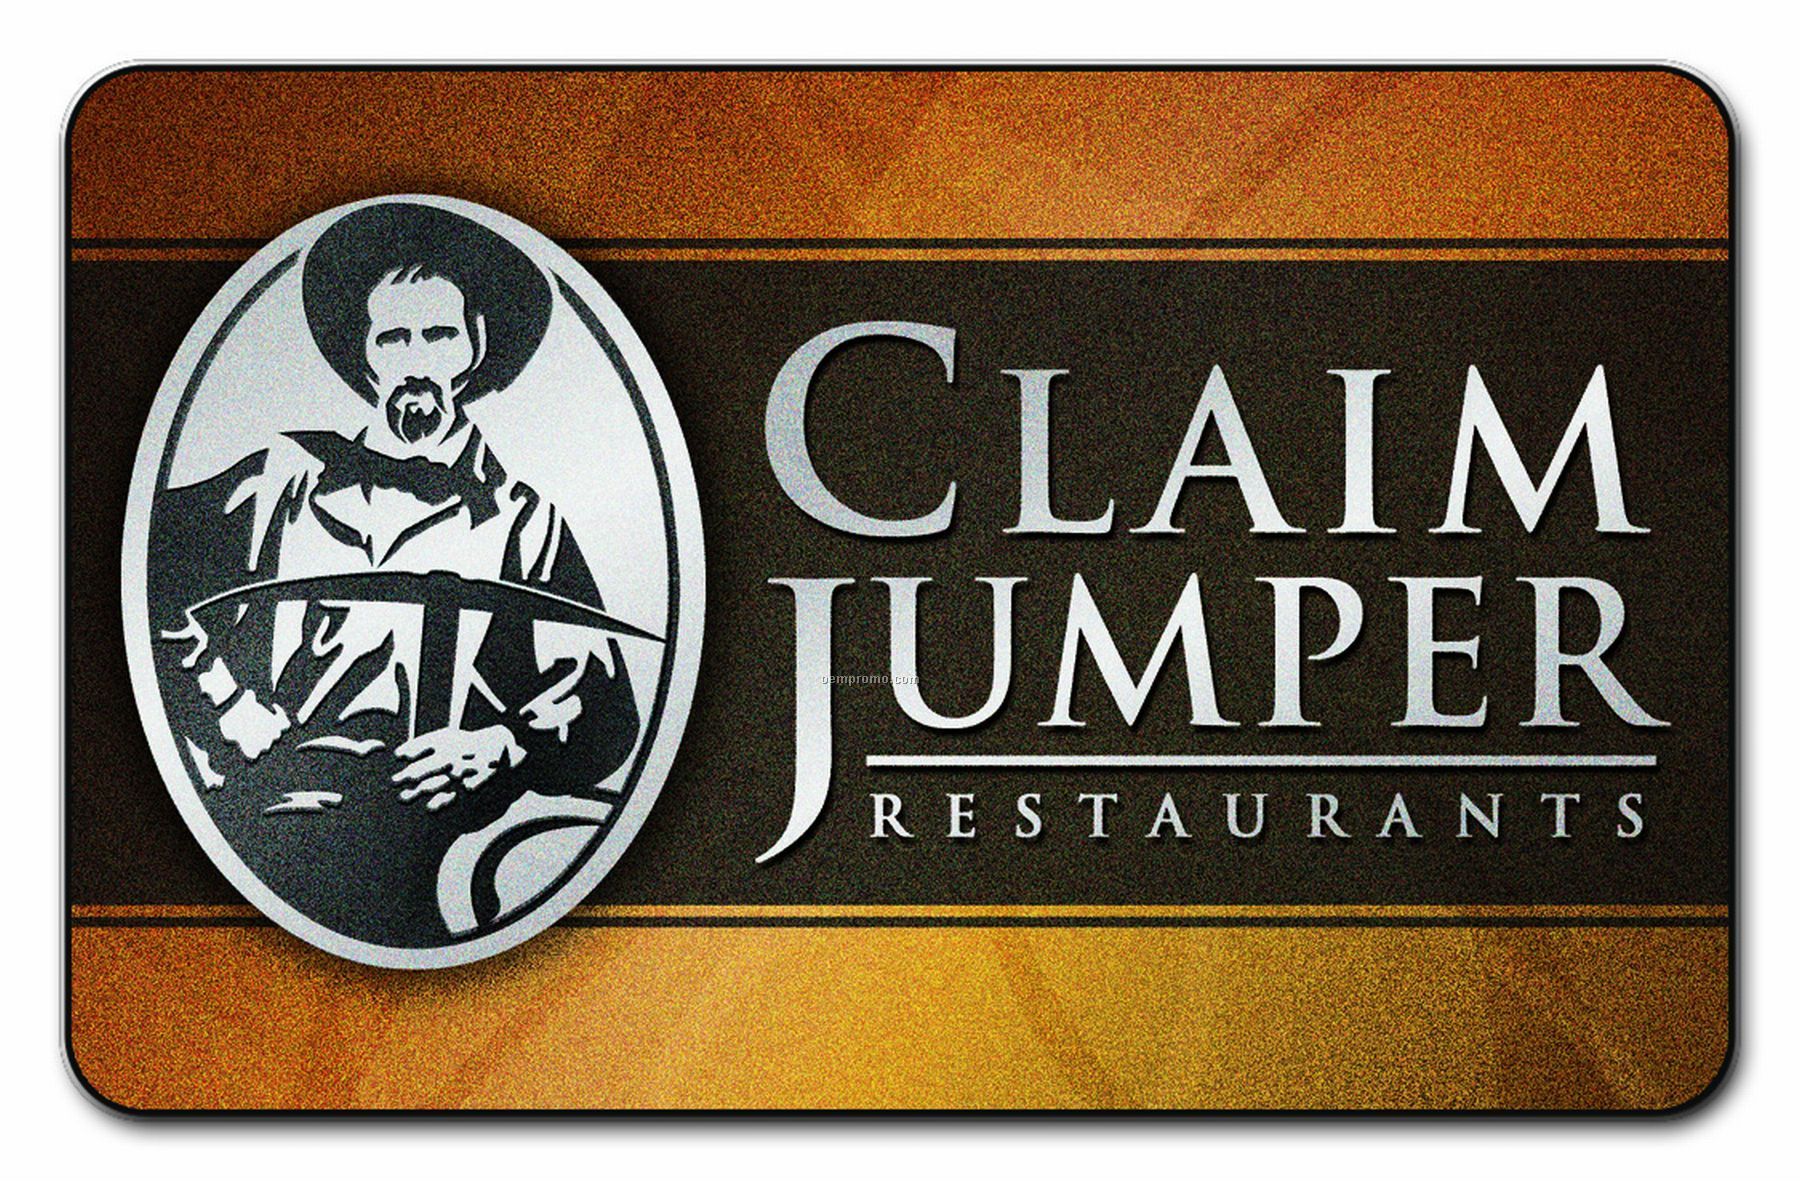 $25 Claim Jumper Gift Card